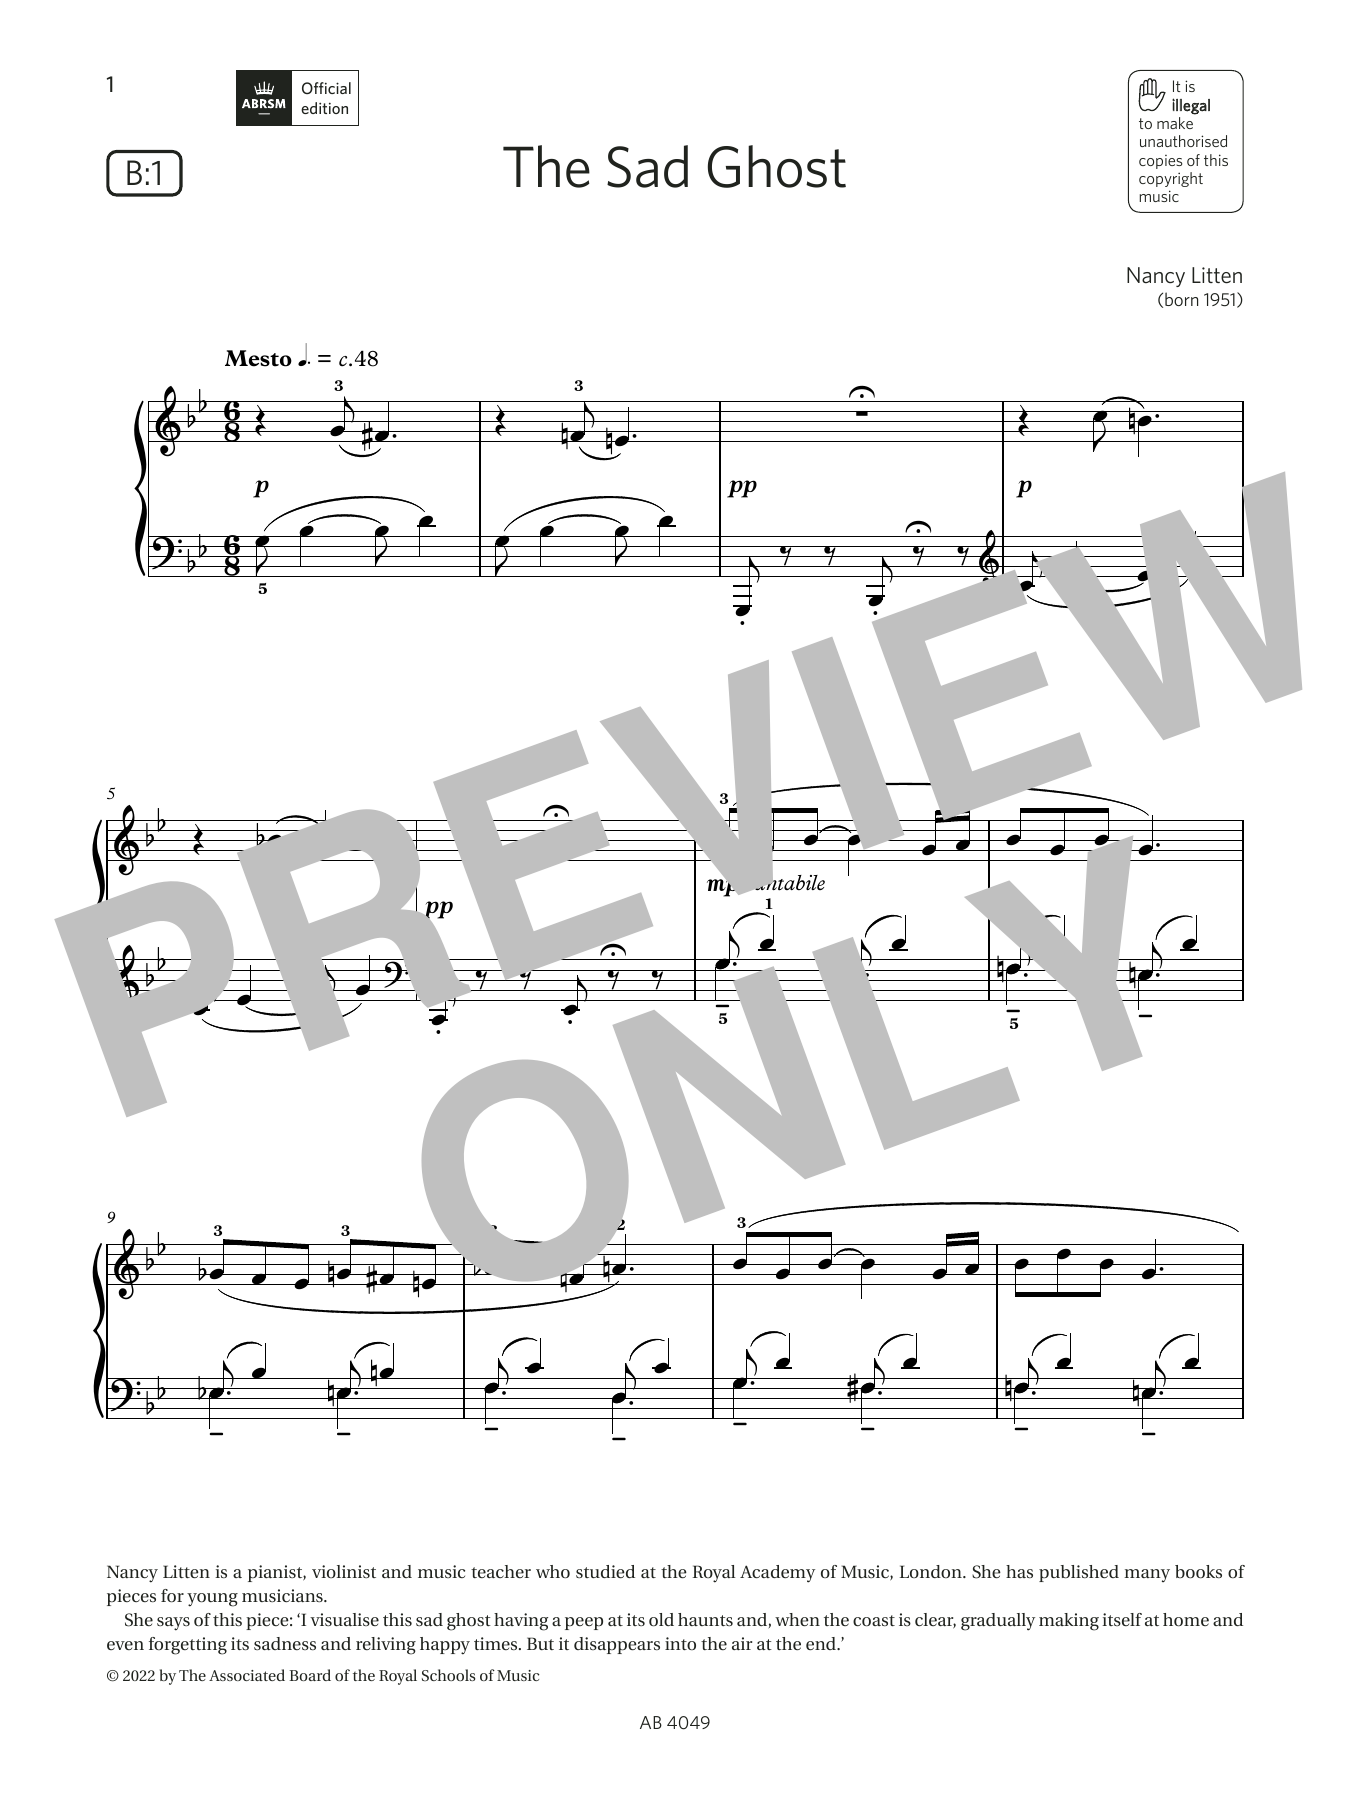 Download Nancy Litten The Sad Ghost (Grade 3, list B1, from t Sheet Music